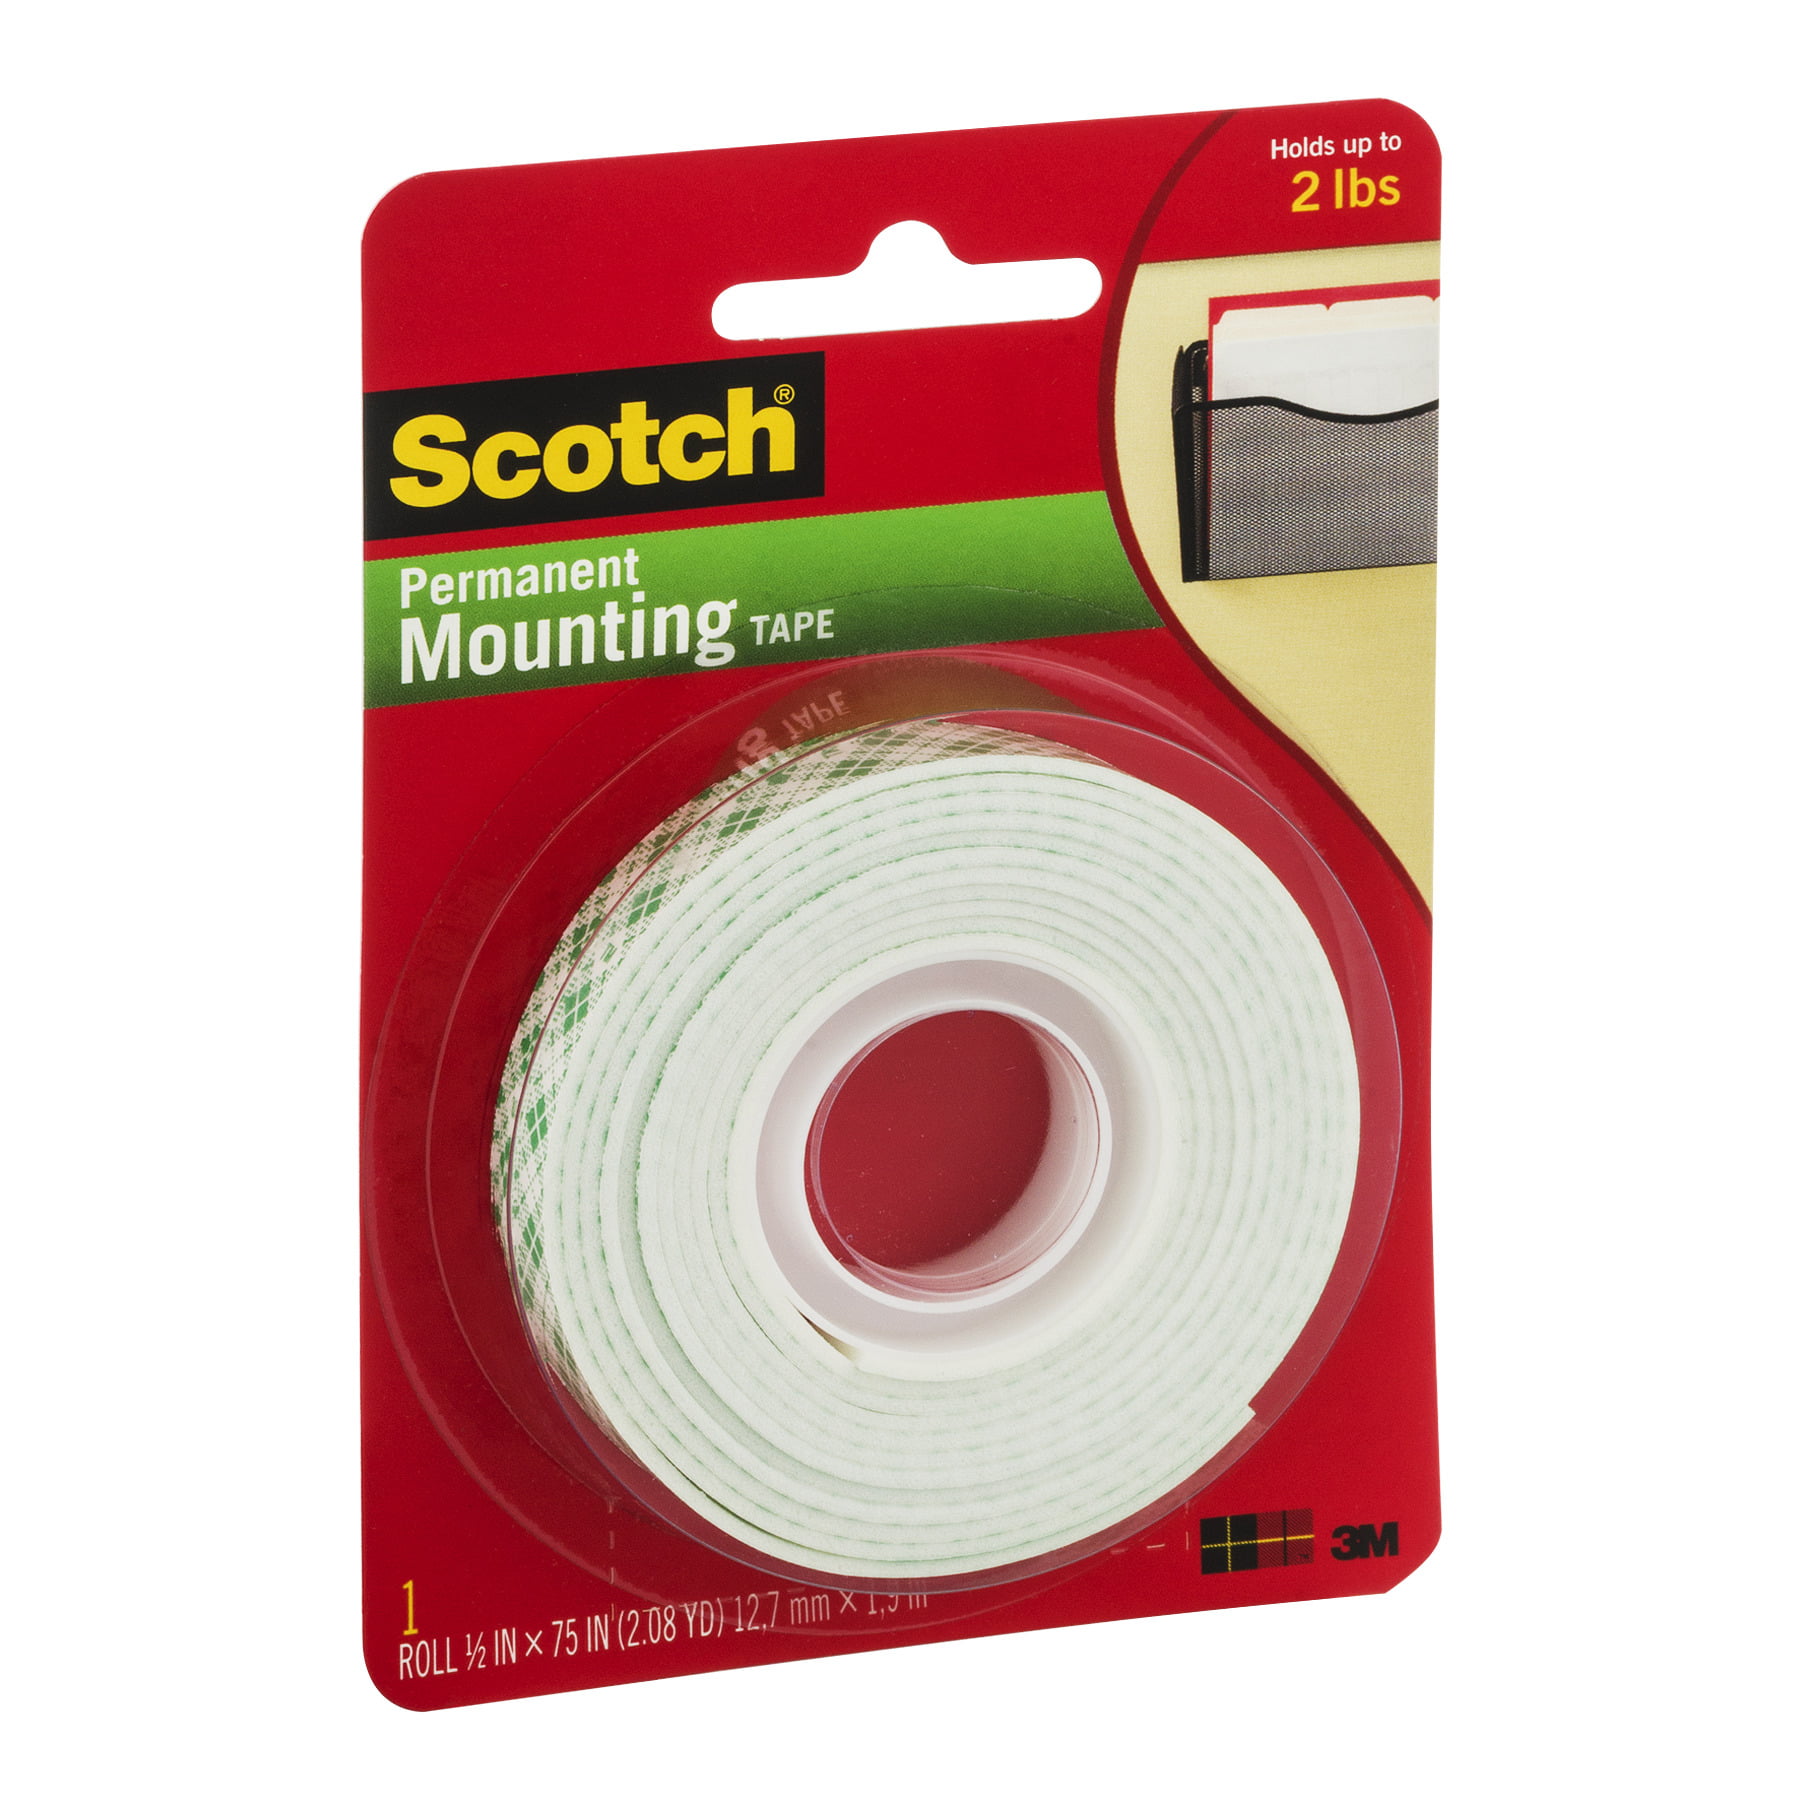 Scotch Permanent Mounting Tape White Holds Up To 2 Lbs 1 5 X 75 Walmart Com Walmart Com